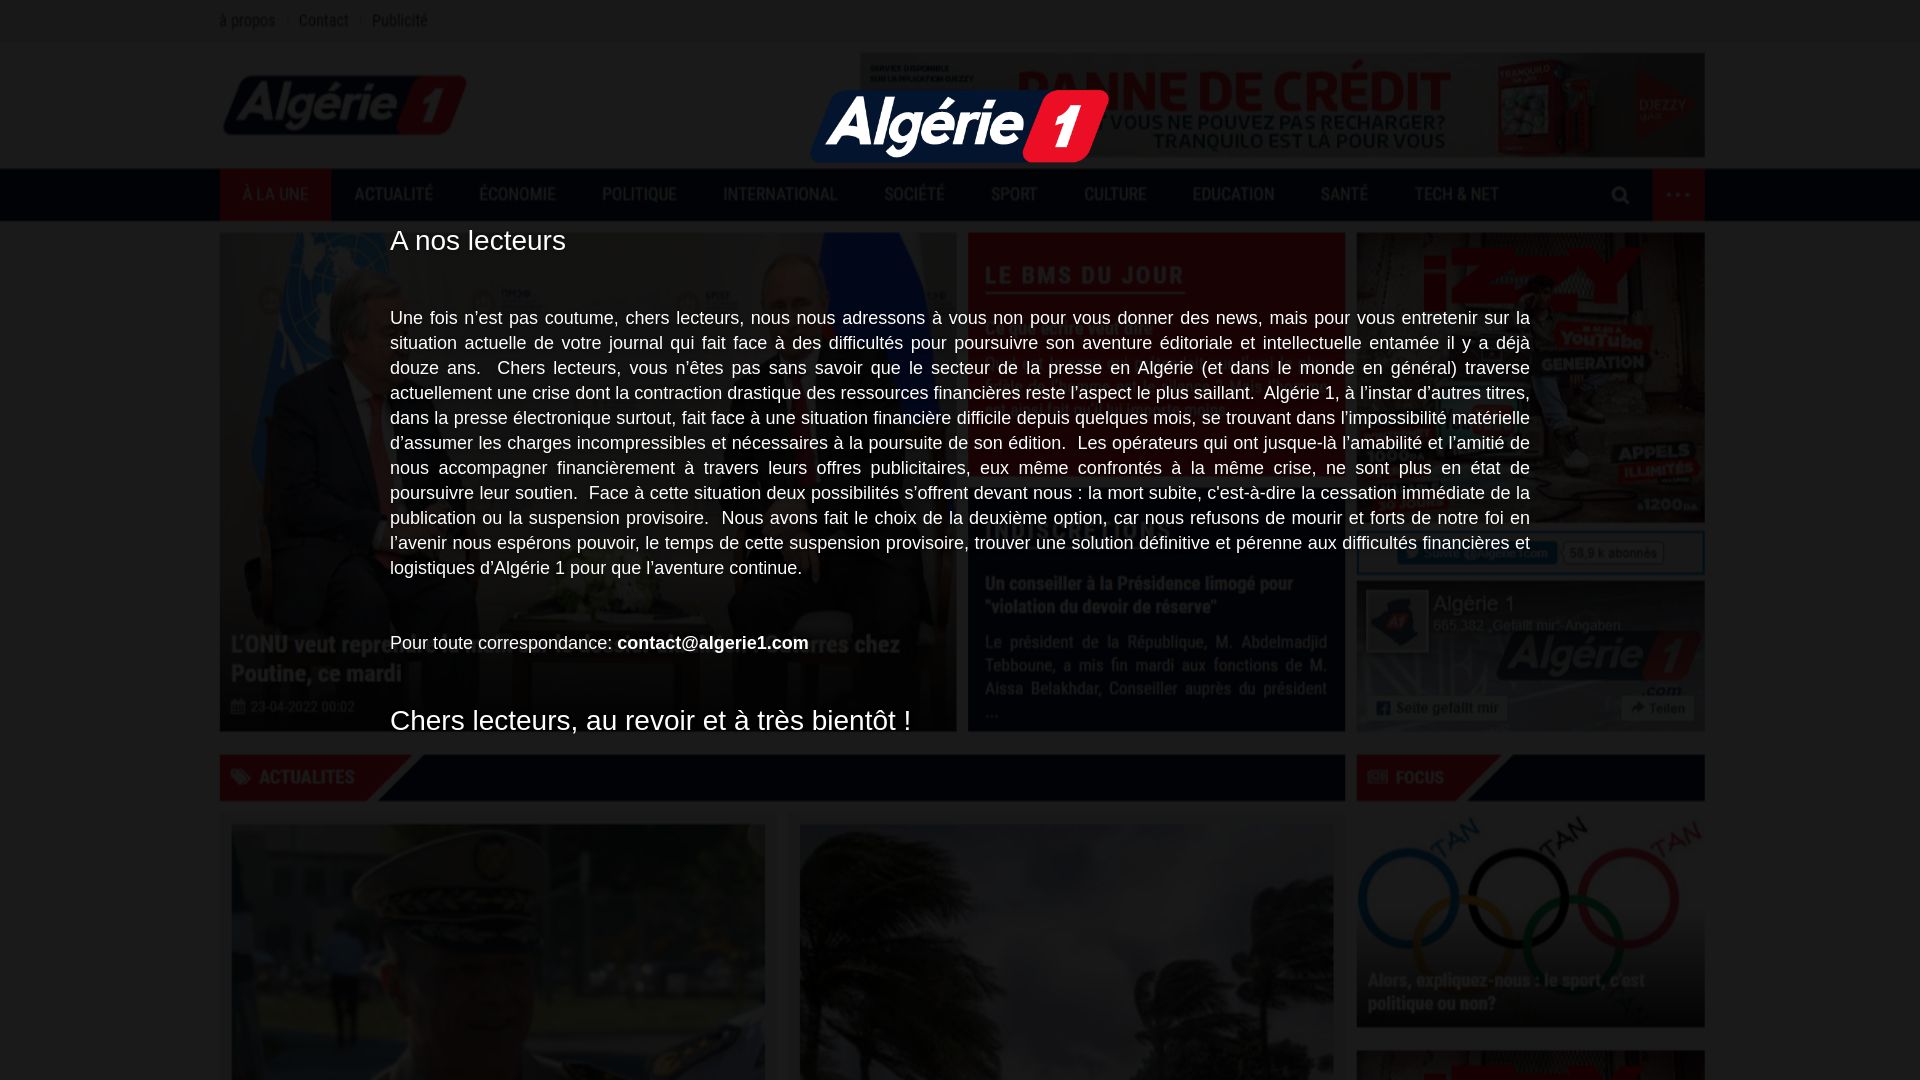 Website status algerie1.com is   ONLINE